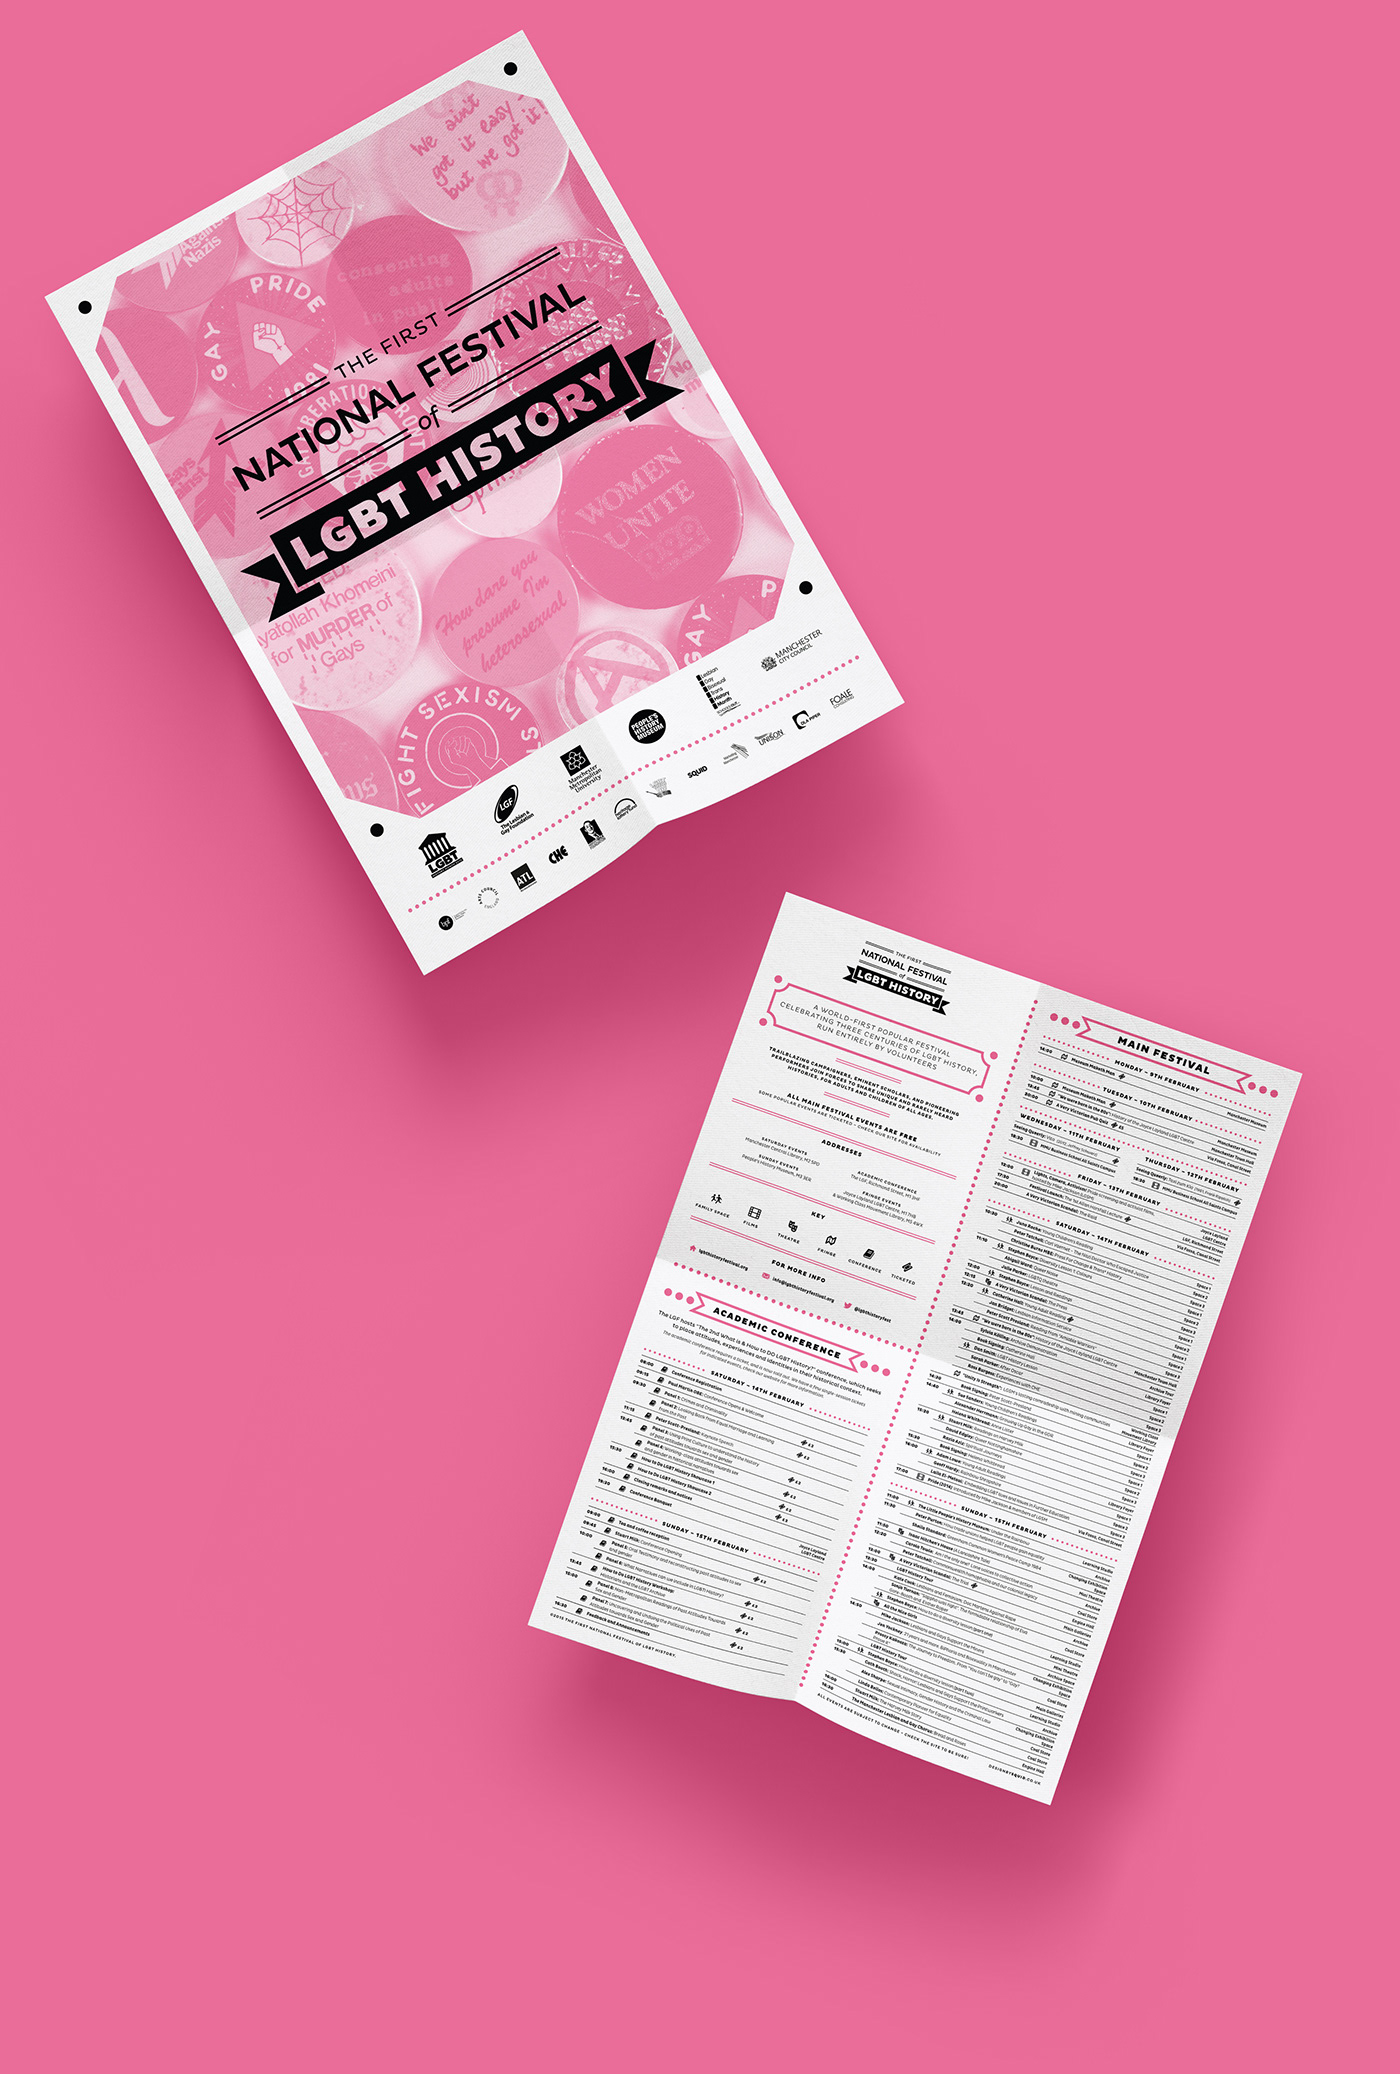 LGBT history lgbt history manchester UK pink festival Web digital print